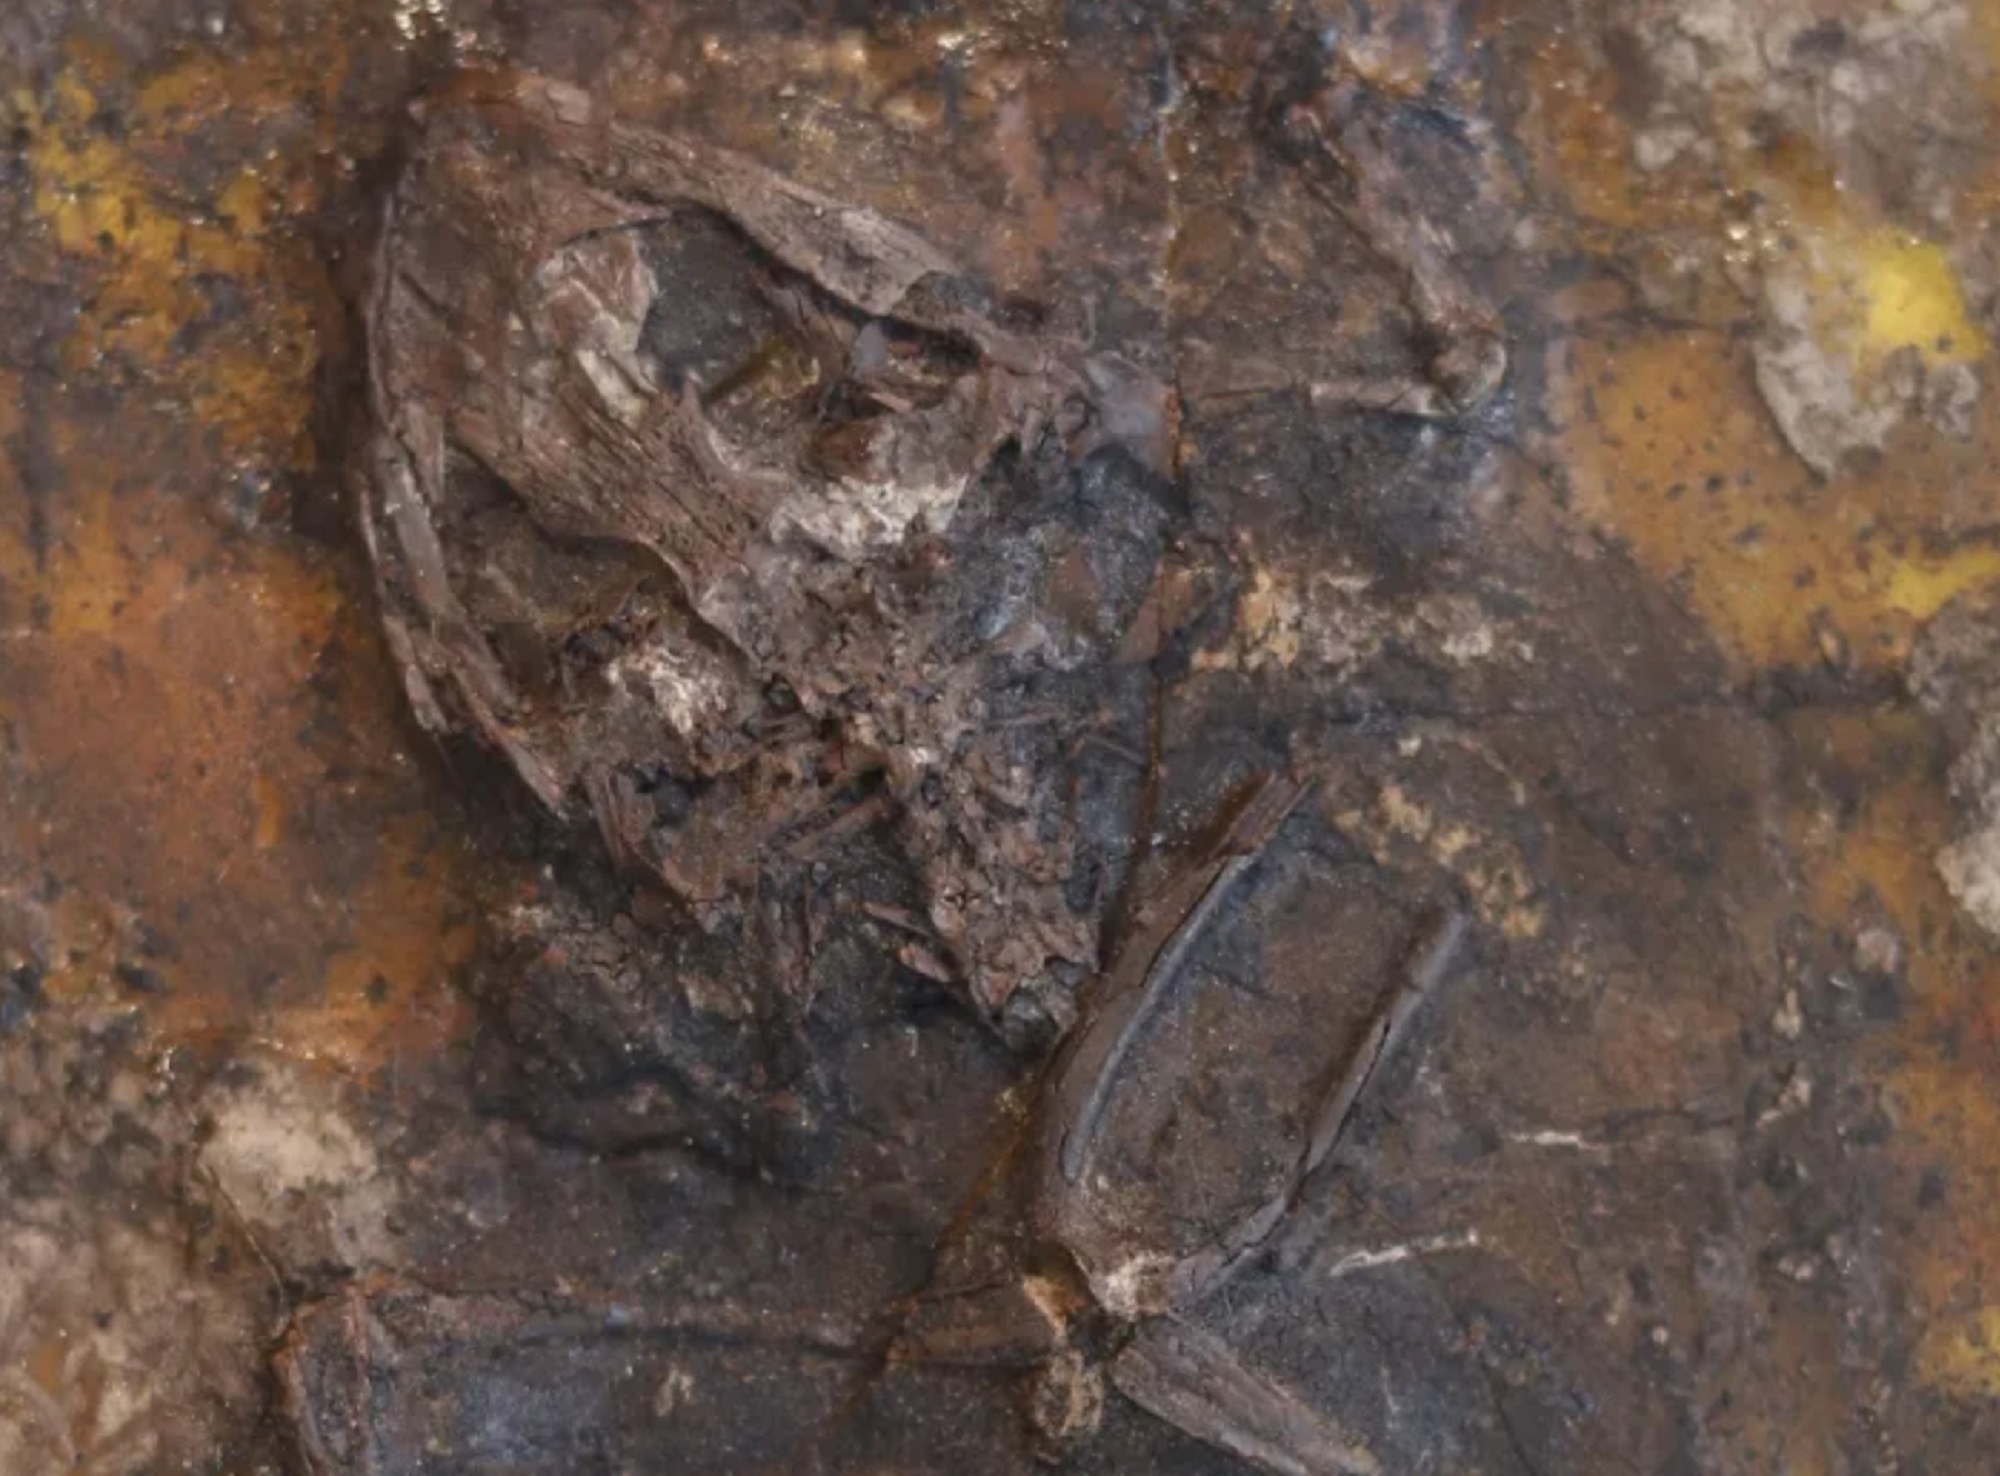 Fossil frog skeleton in rock from German swamp